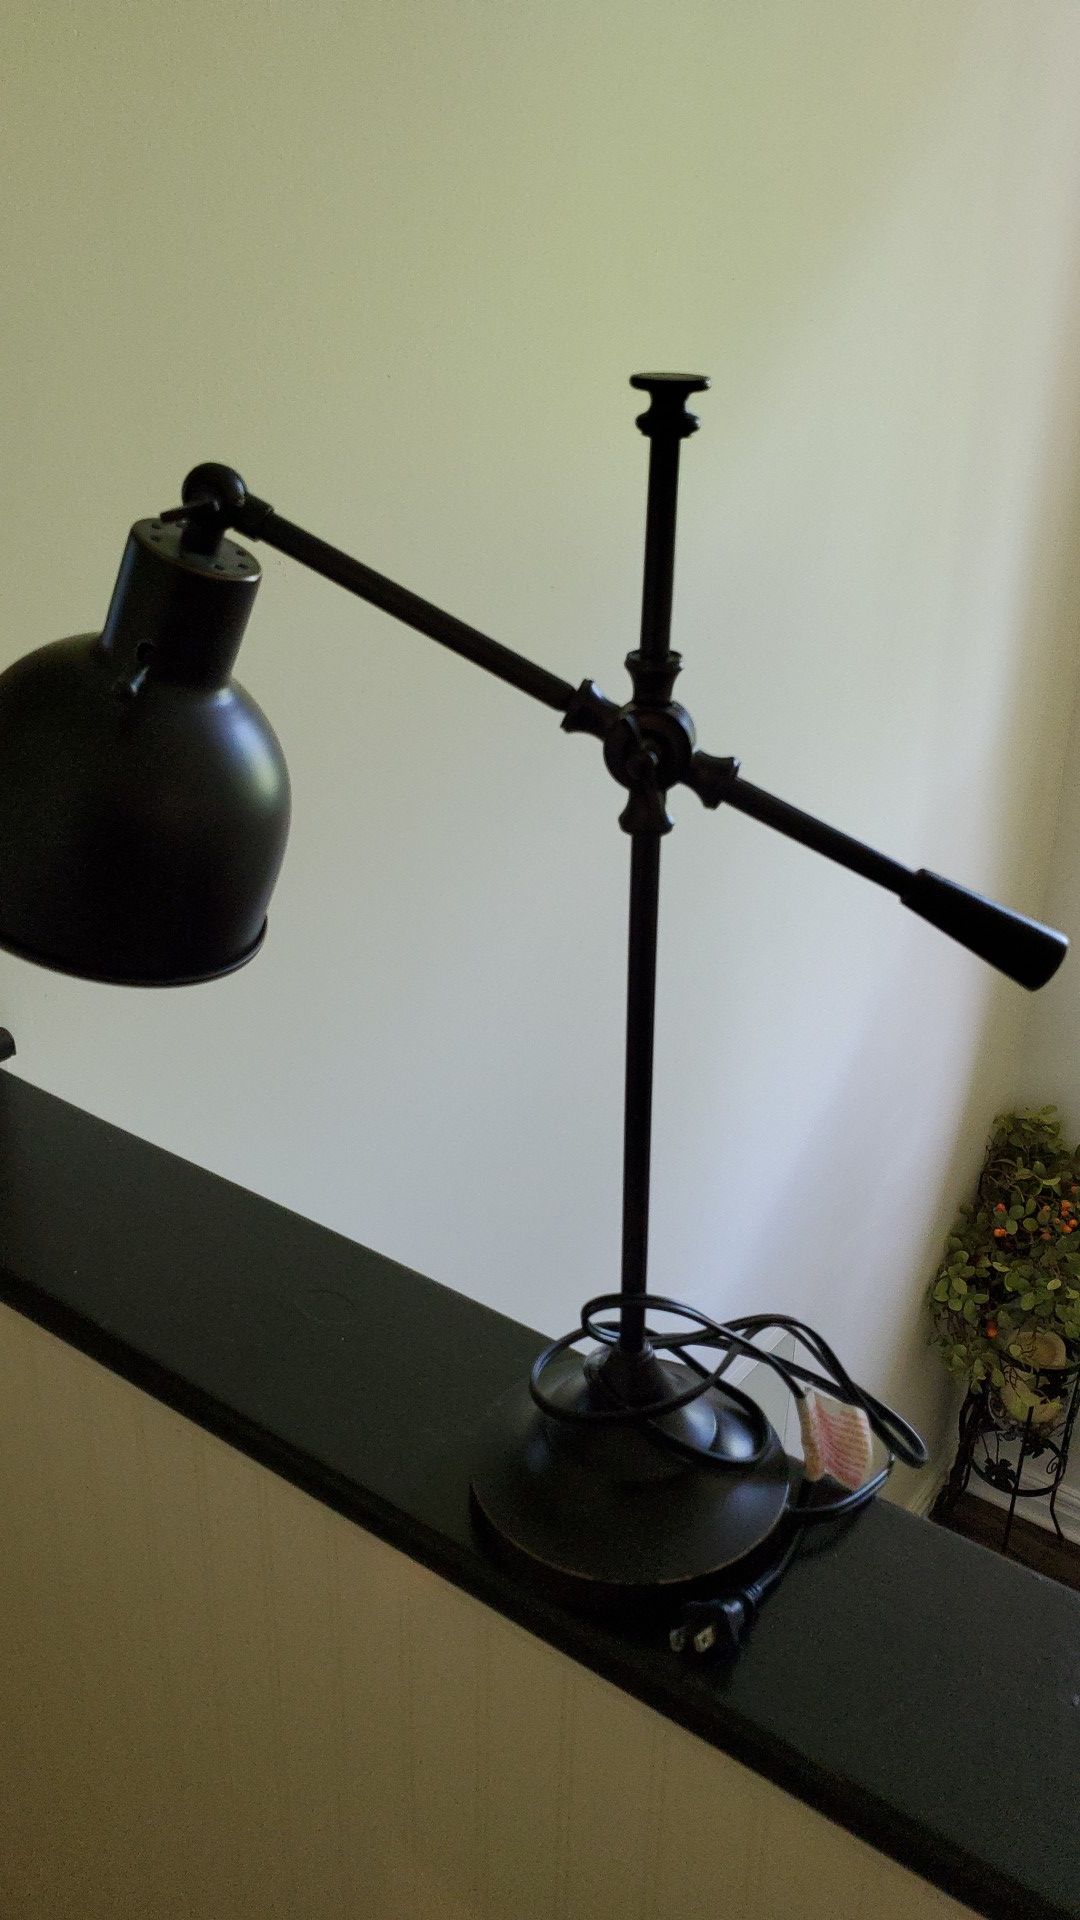 Cool desk lamp!